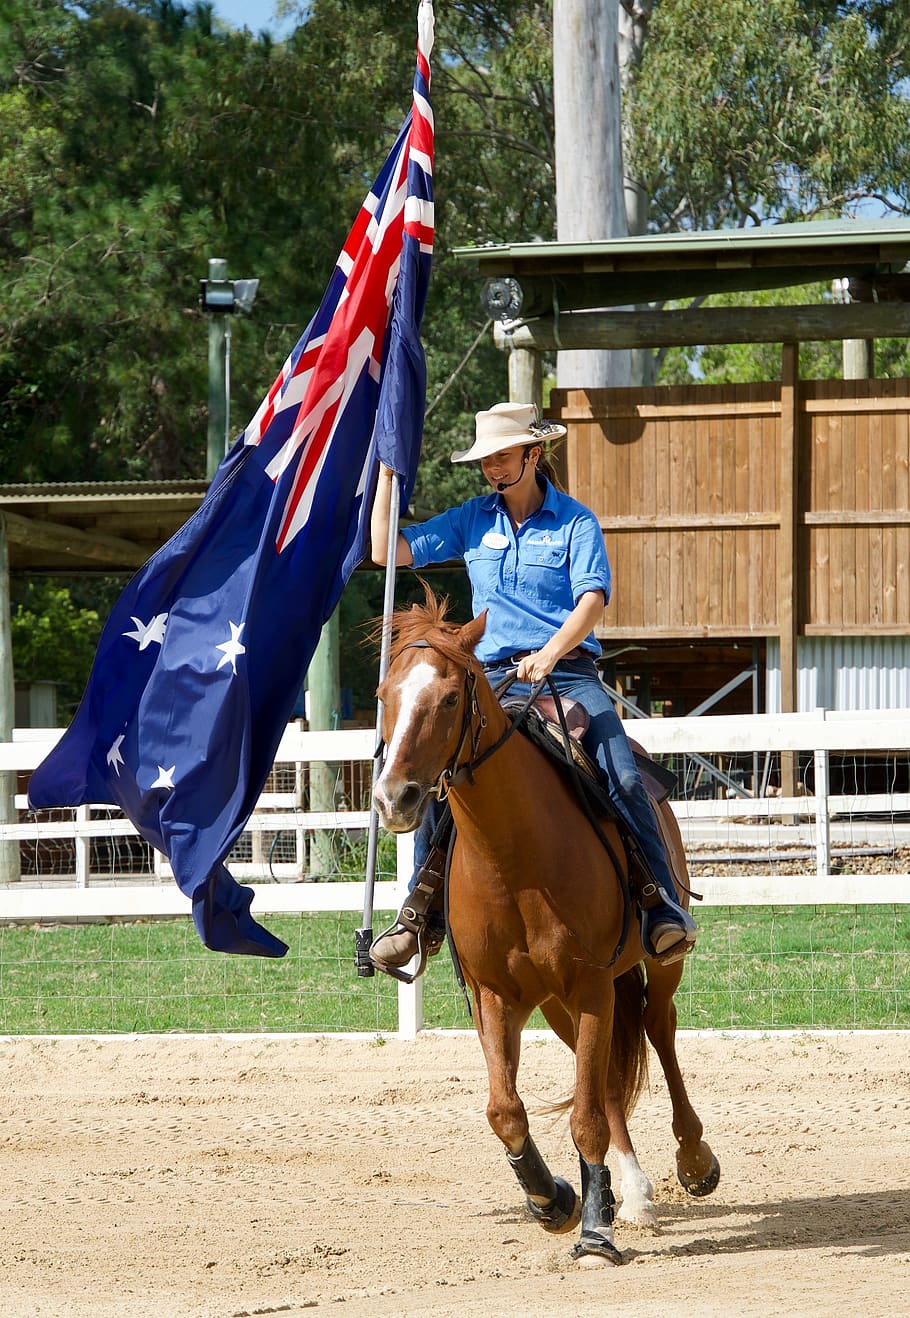 caballo, bandera, competencia, deporte, australia, jinete, pancarta, celebracion, desfile, ganado